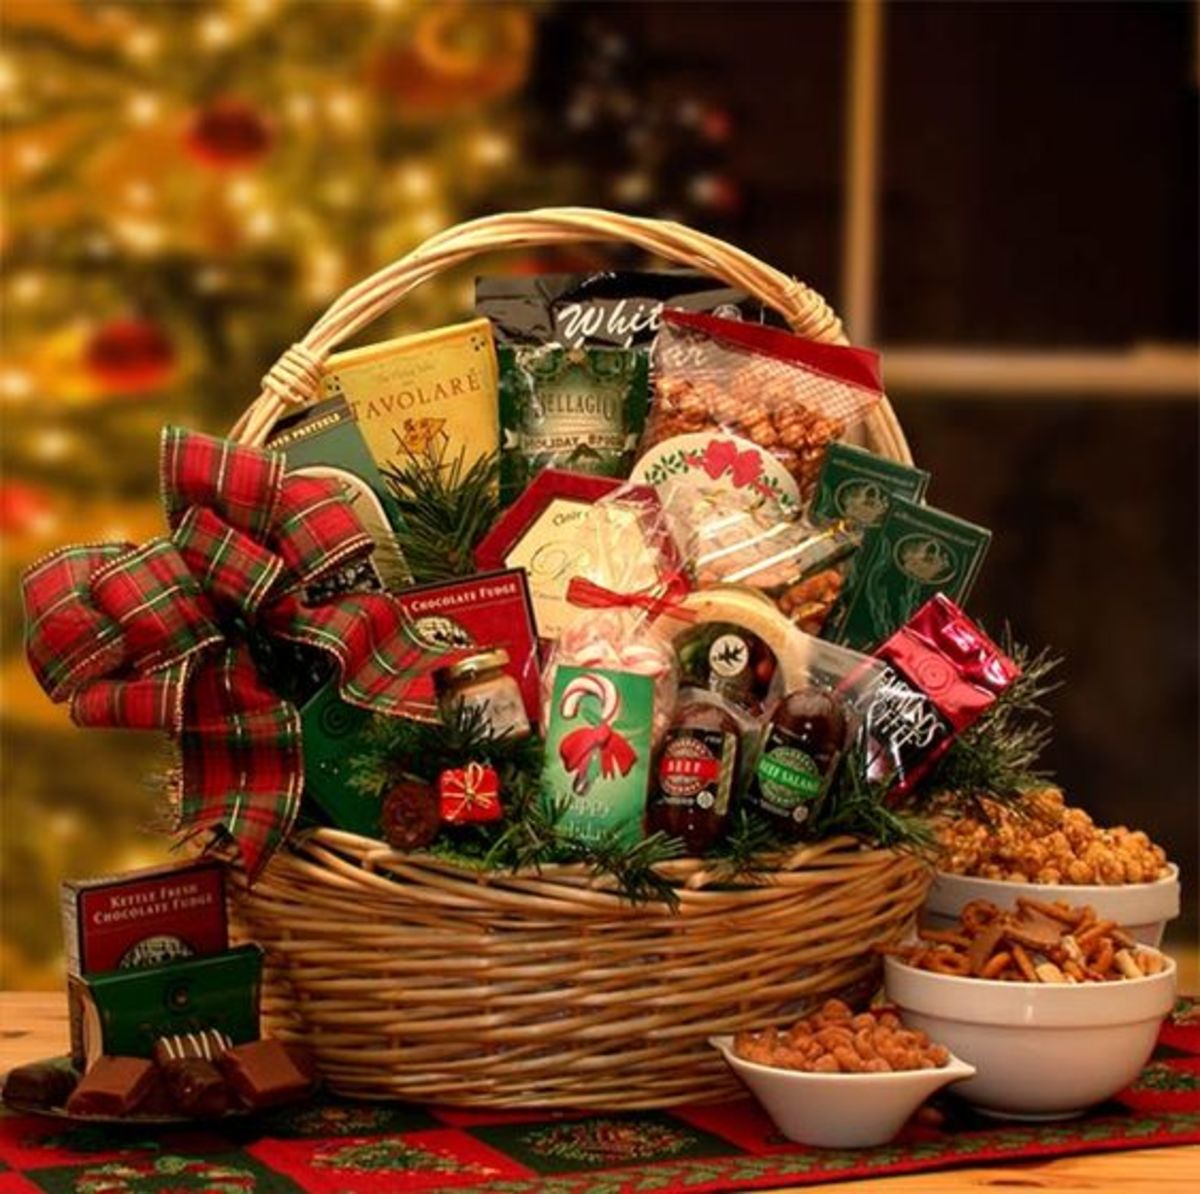 Gift Basket Full of Goodies